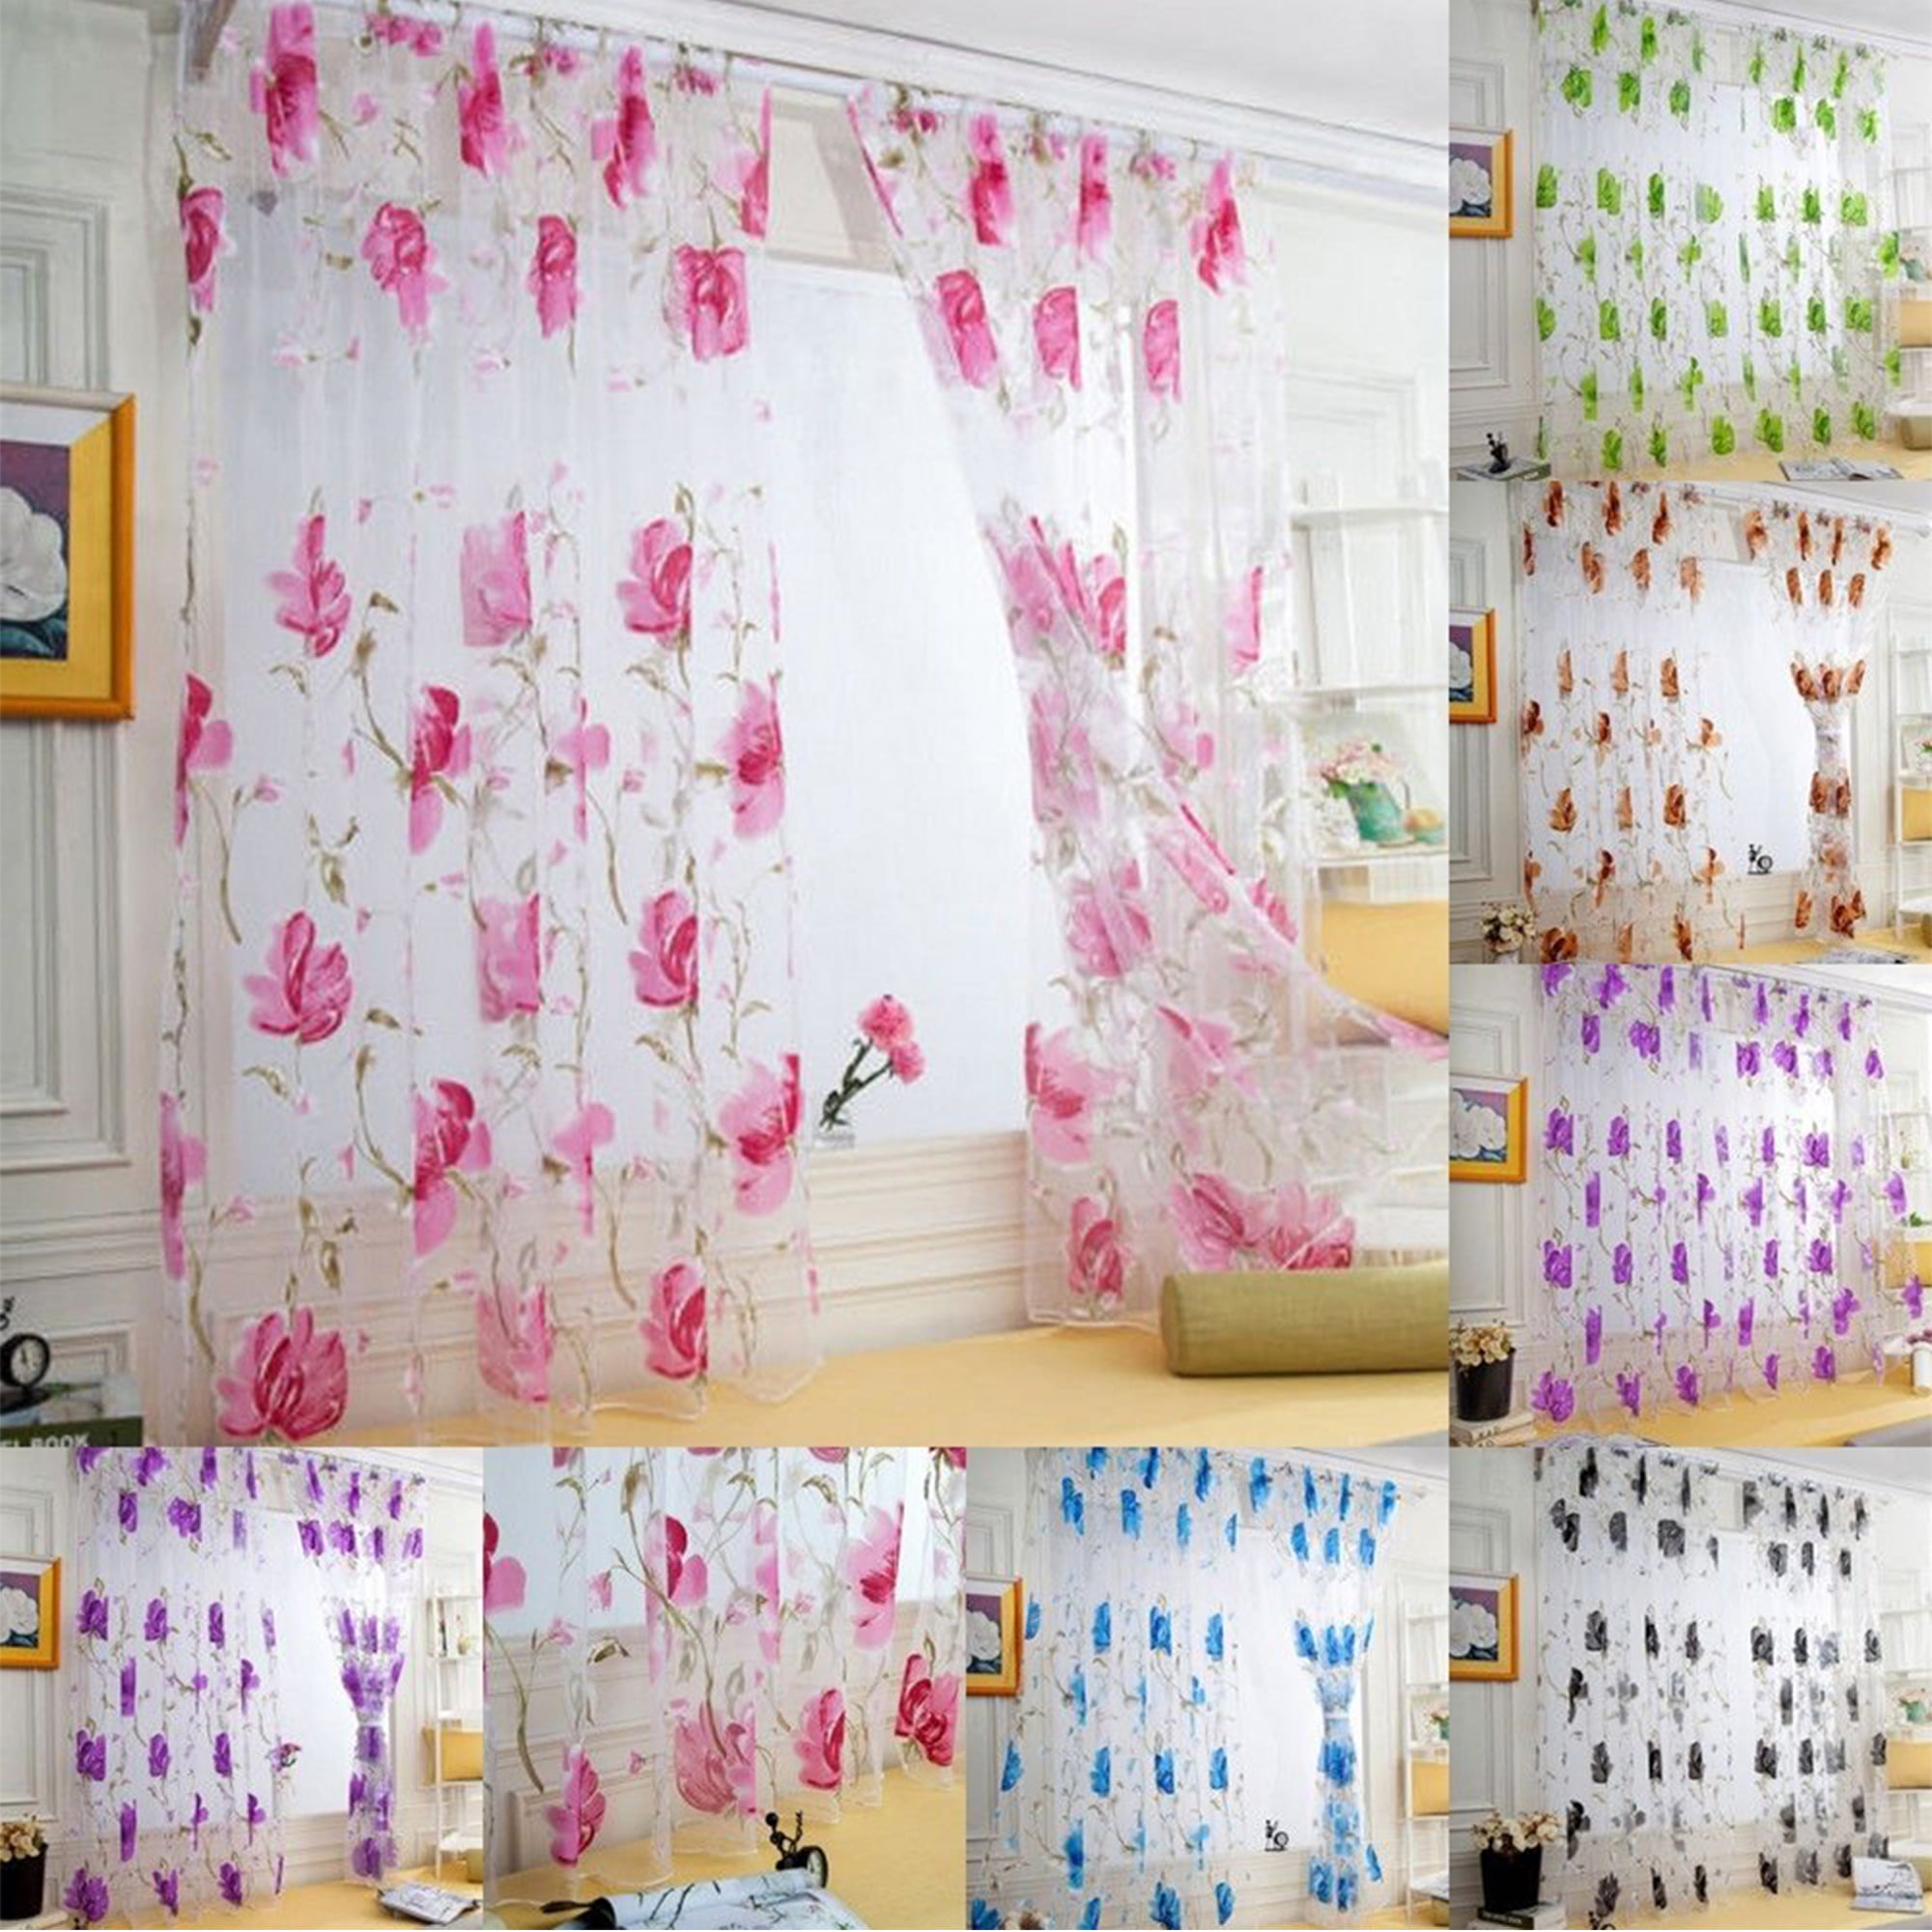 1PC Grommet Voile Sheer Floral Tulle Window Curtain Door Curtain Drape Panel 